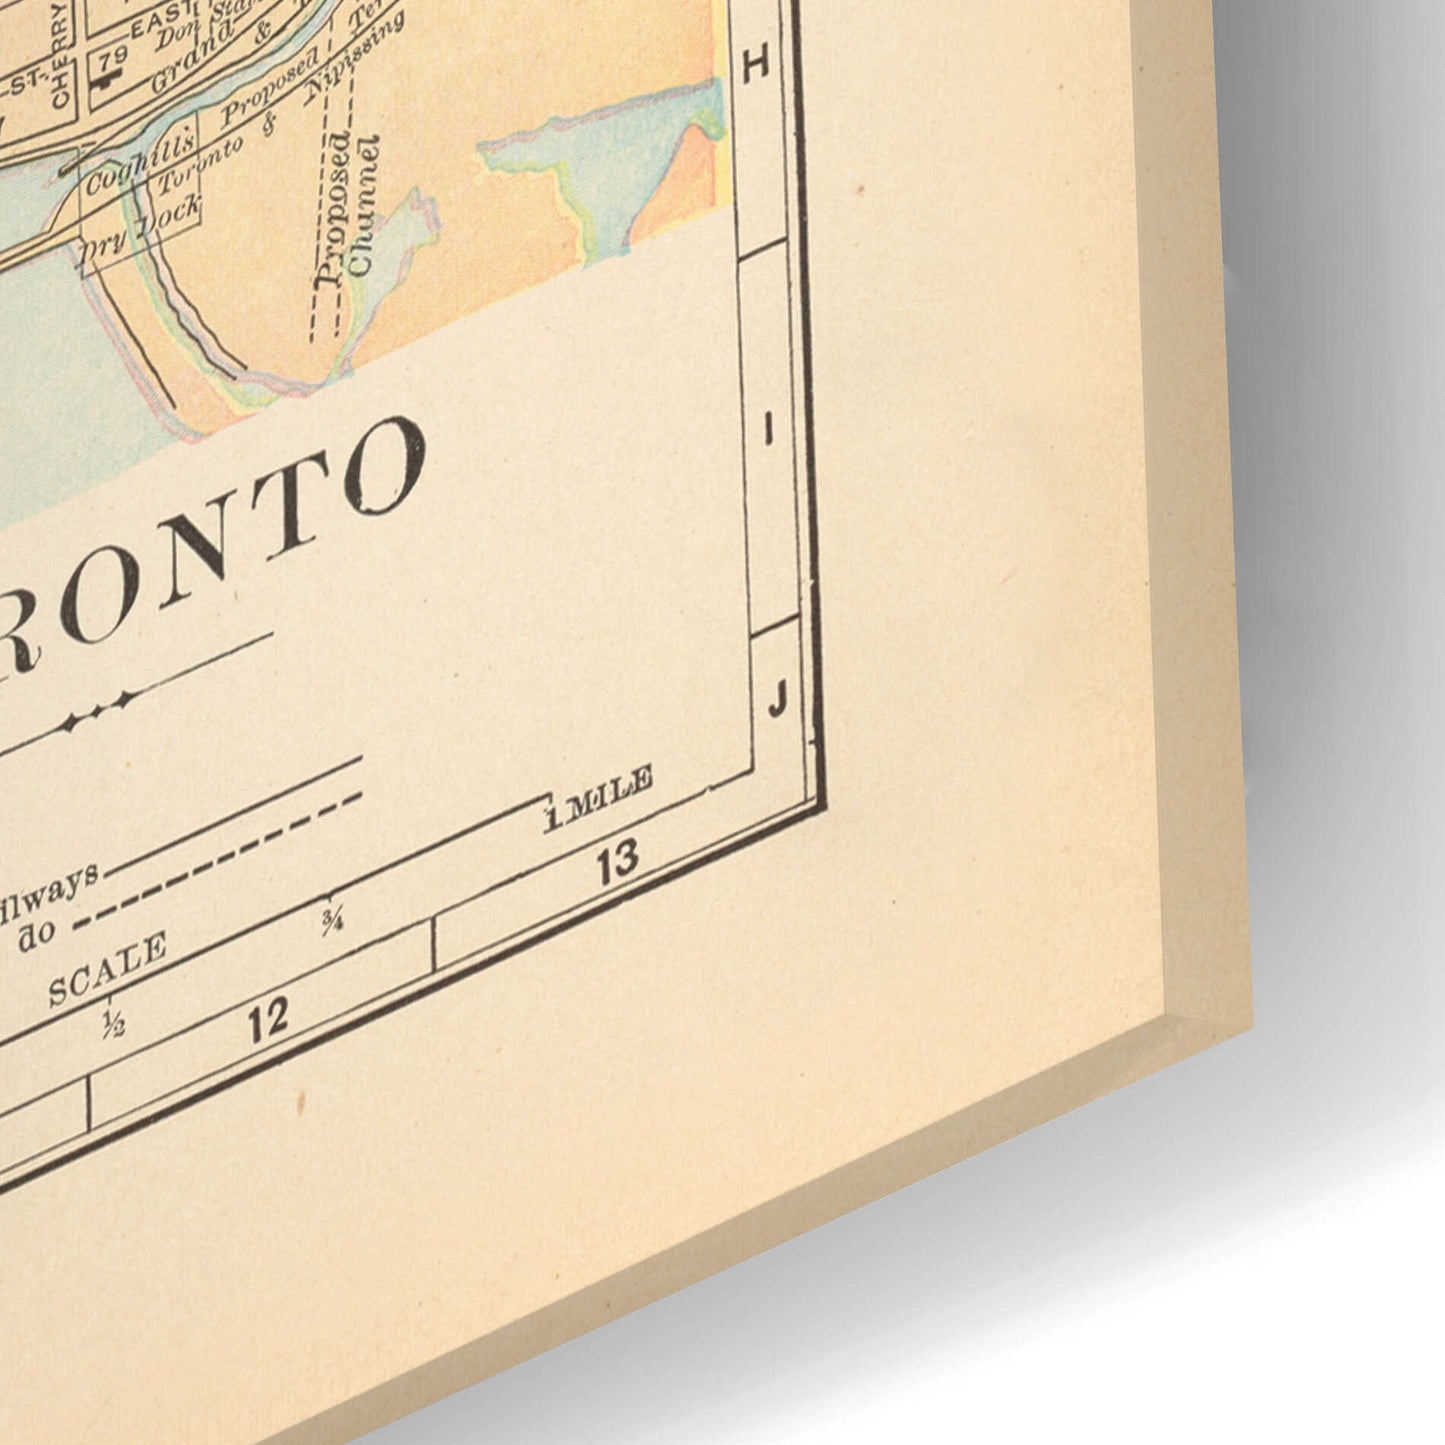 Epic Art 'Map of Toronto' by Wild Apple Portfolio, Acrylic Glass Wall Art,24x16